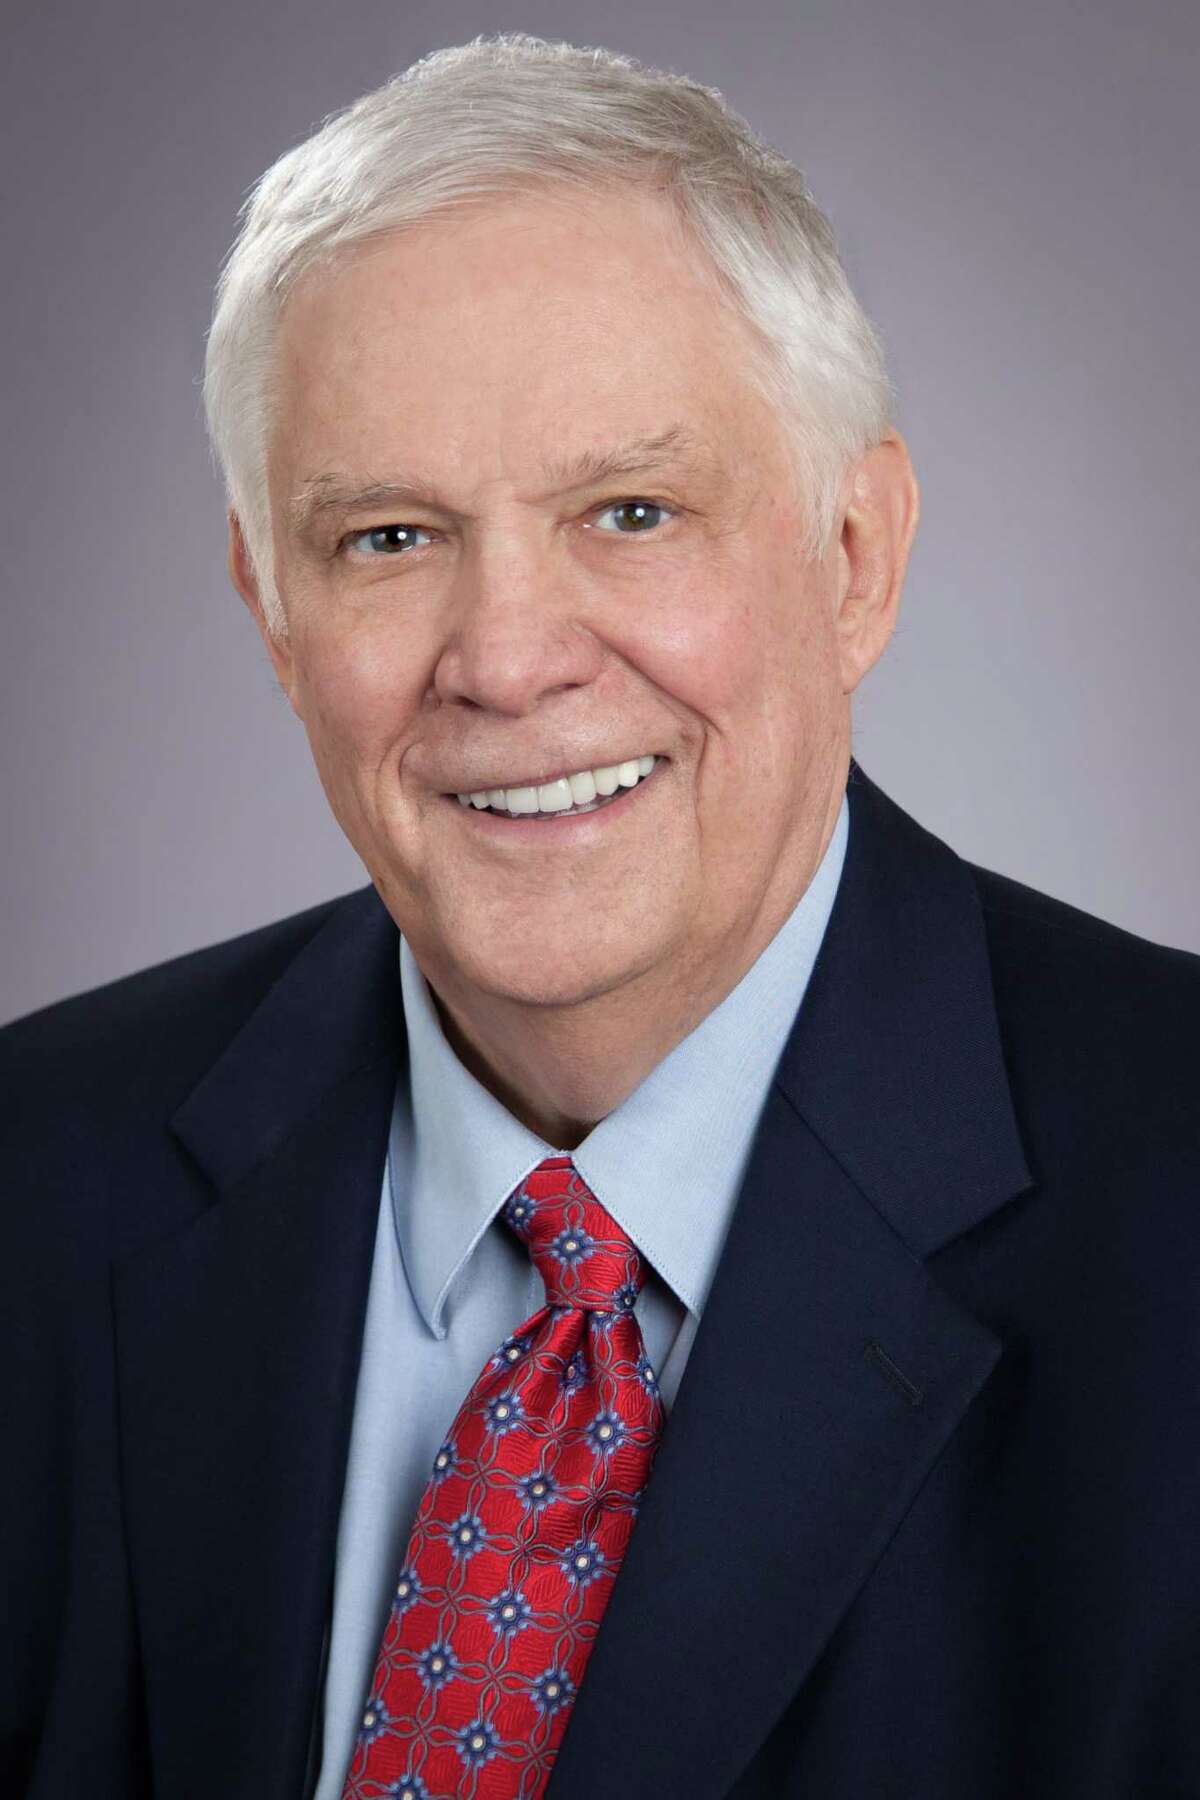 Tom Luce, founder of Texas 2036